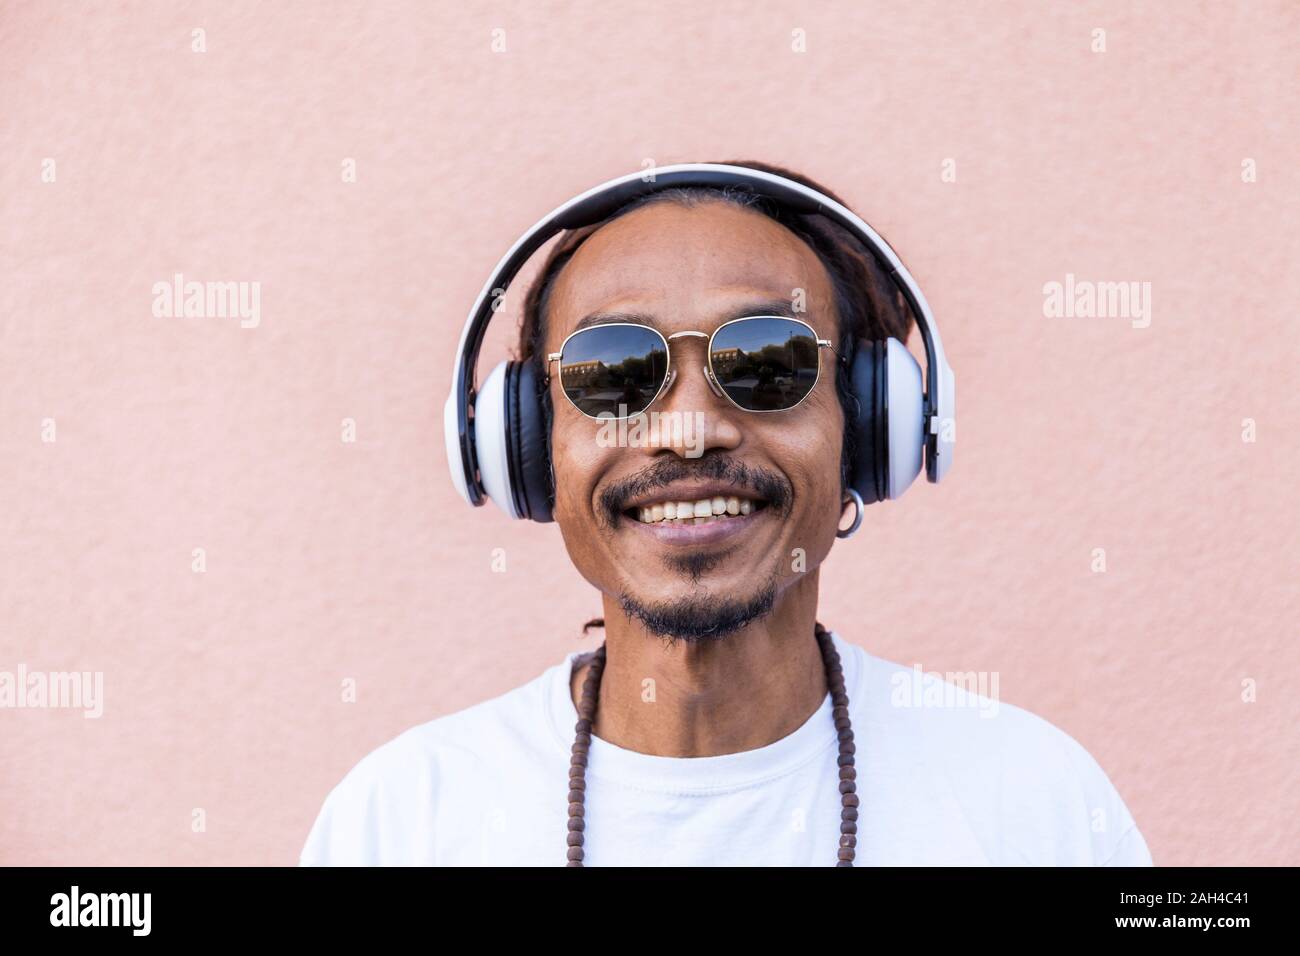 Portrait of mature man with dreadlocks and headphones, listening music Stock Photo